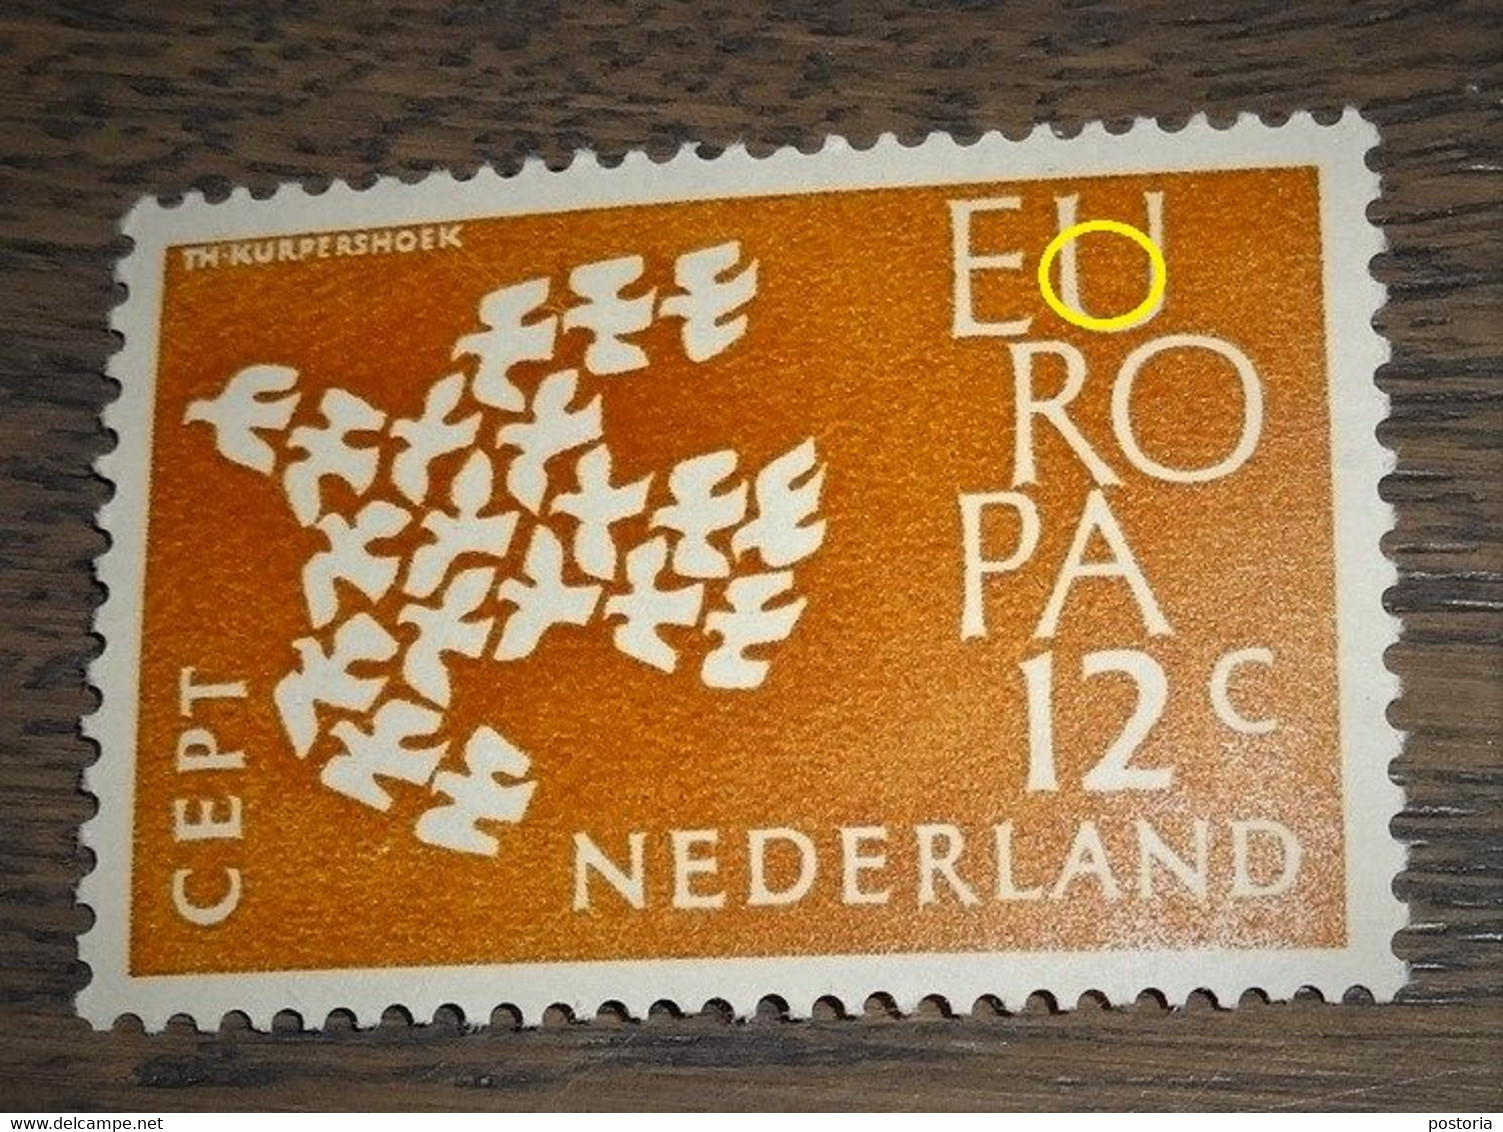 Nederland - MAST - 757 PM1 - 1961 - Plaatfout - Postfris - Vlek In U Van EU - Errors & Oddities